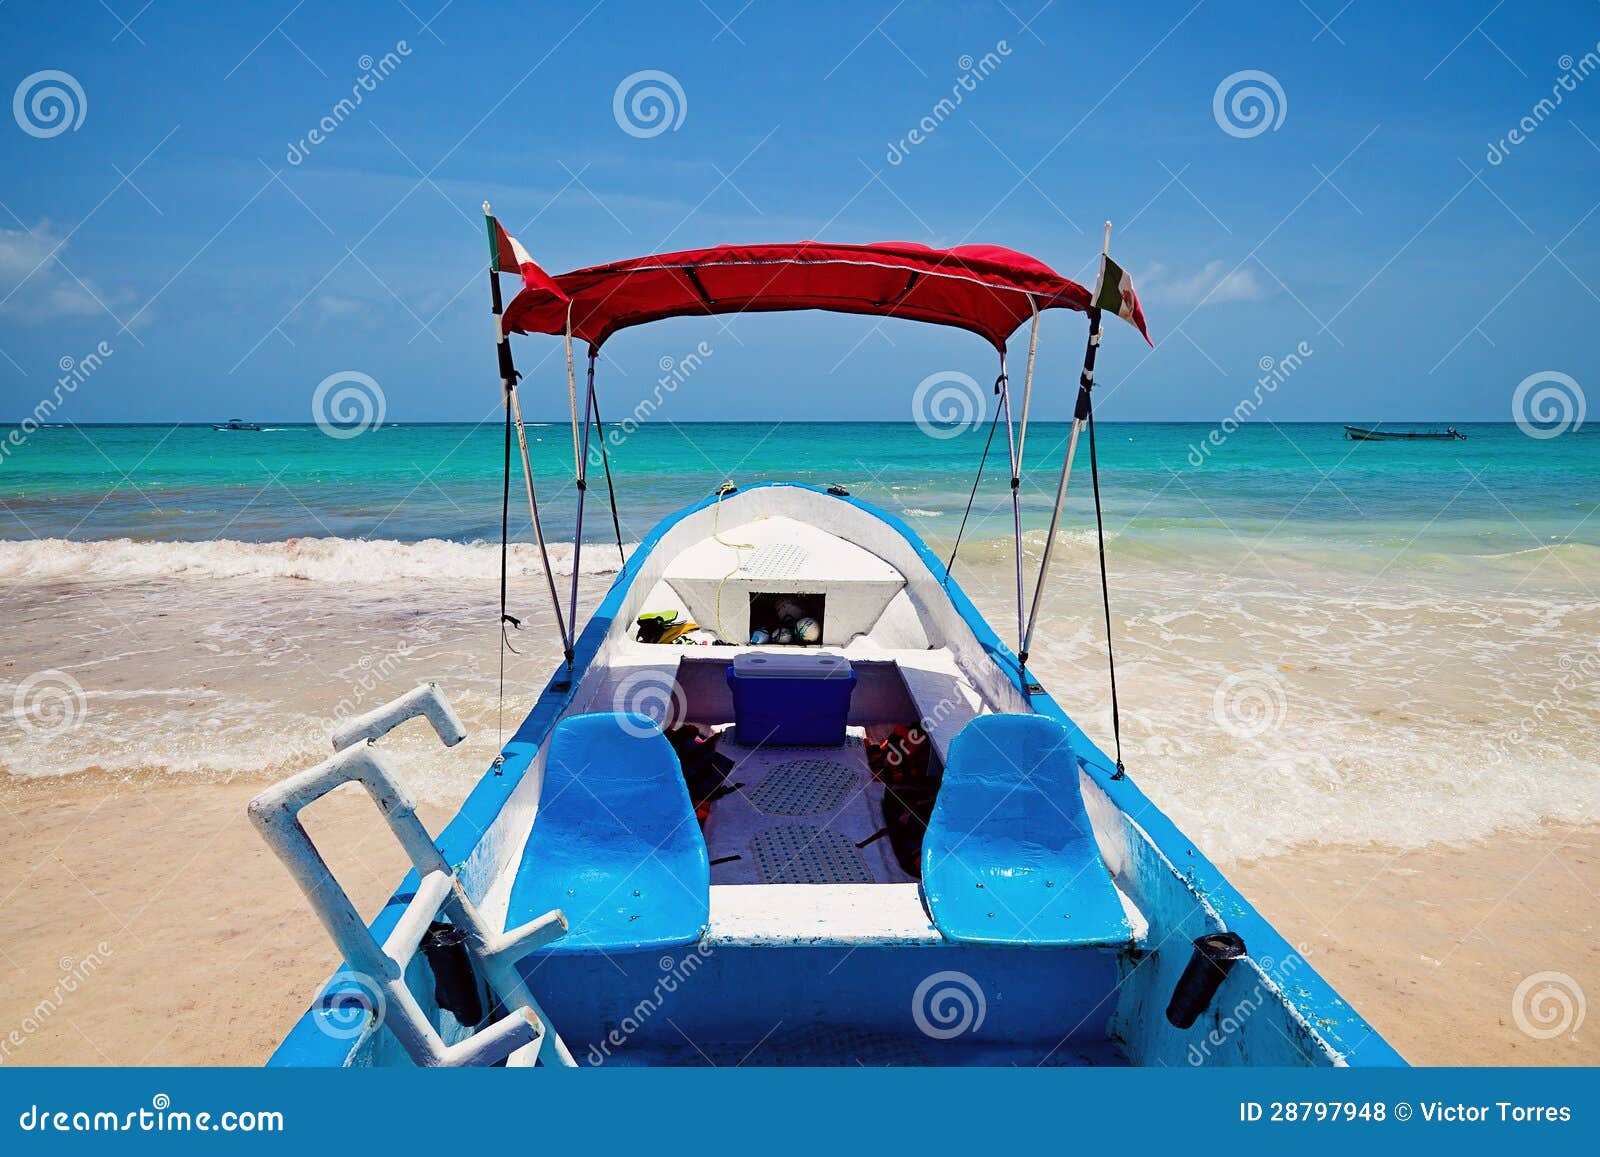 yacht moored in playa paraiso, mayan riviera,